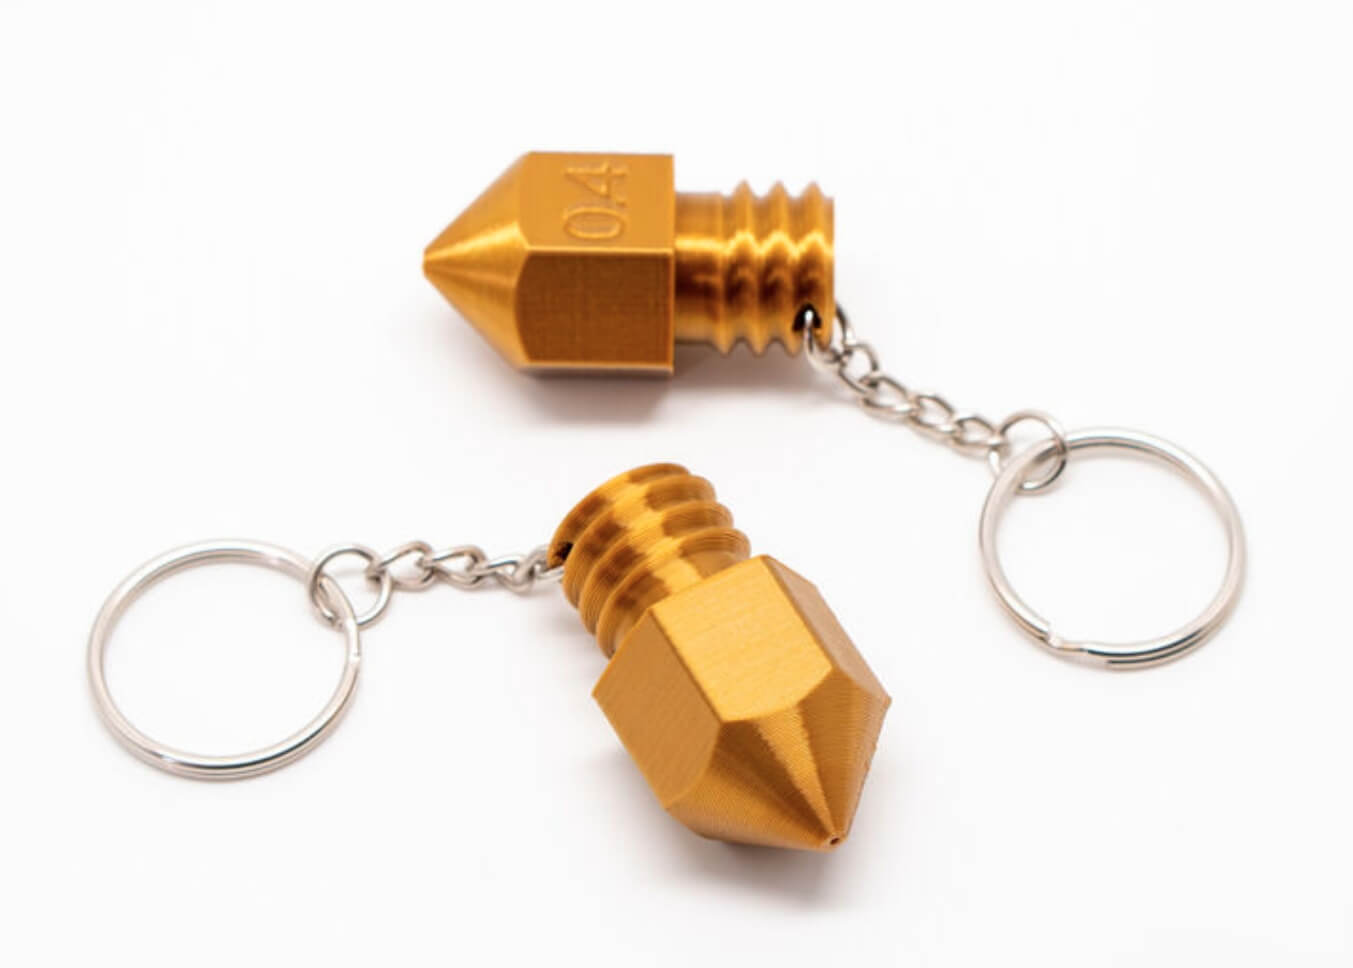 Key chain designed as a 3D printer Nozzle